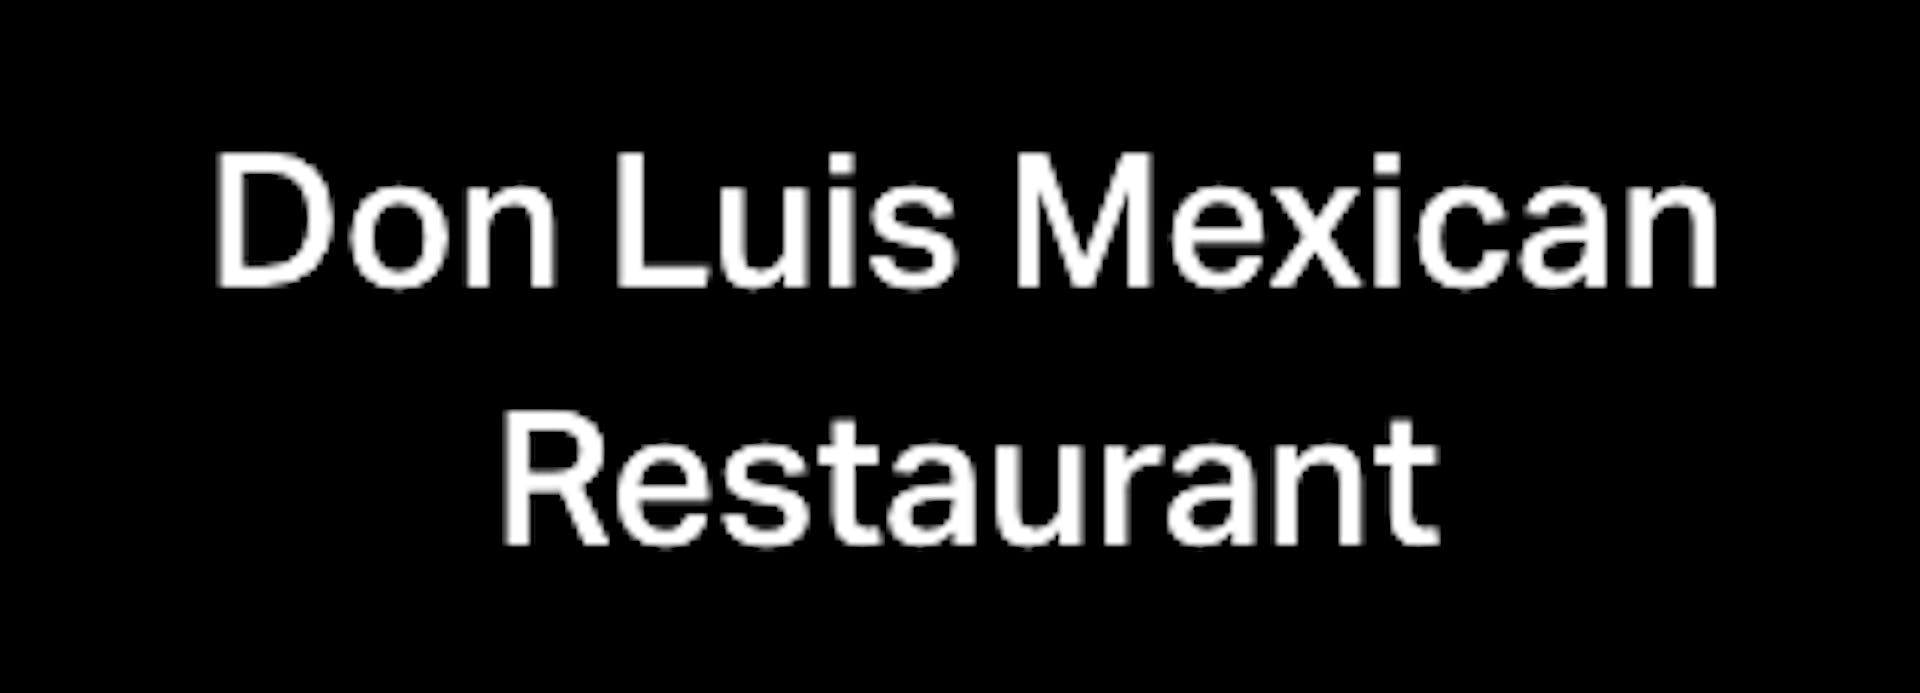 DON LUIS MEXICAN RESTAURANT